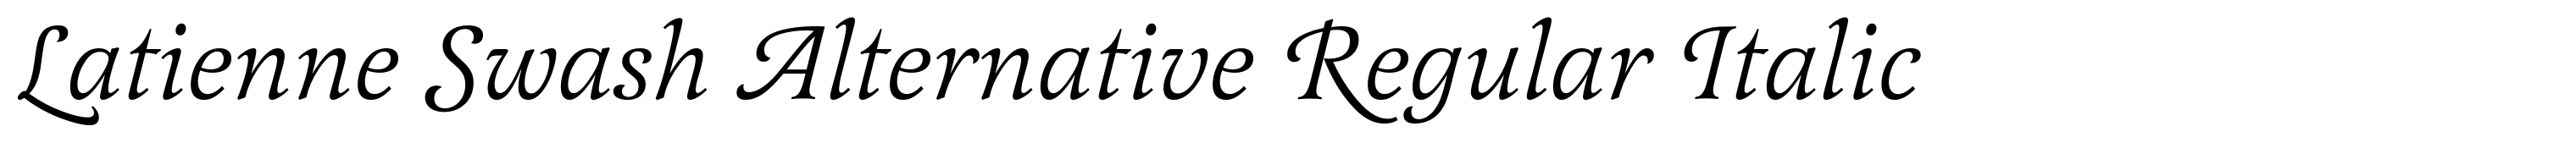 Latienne Swash Alternative Regular Italic